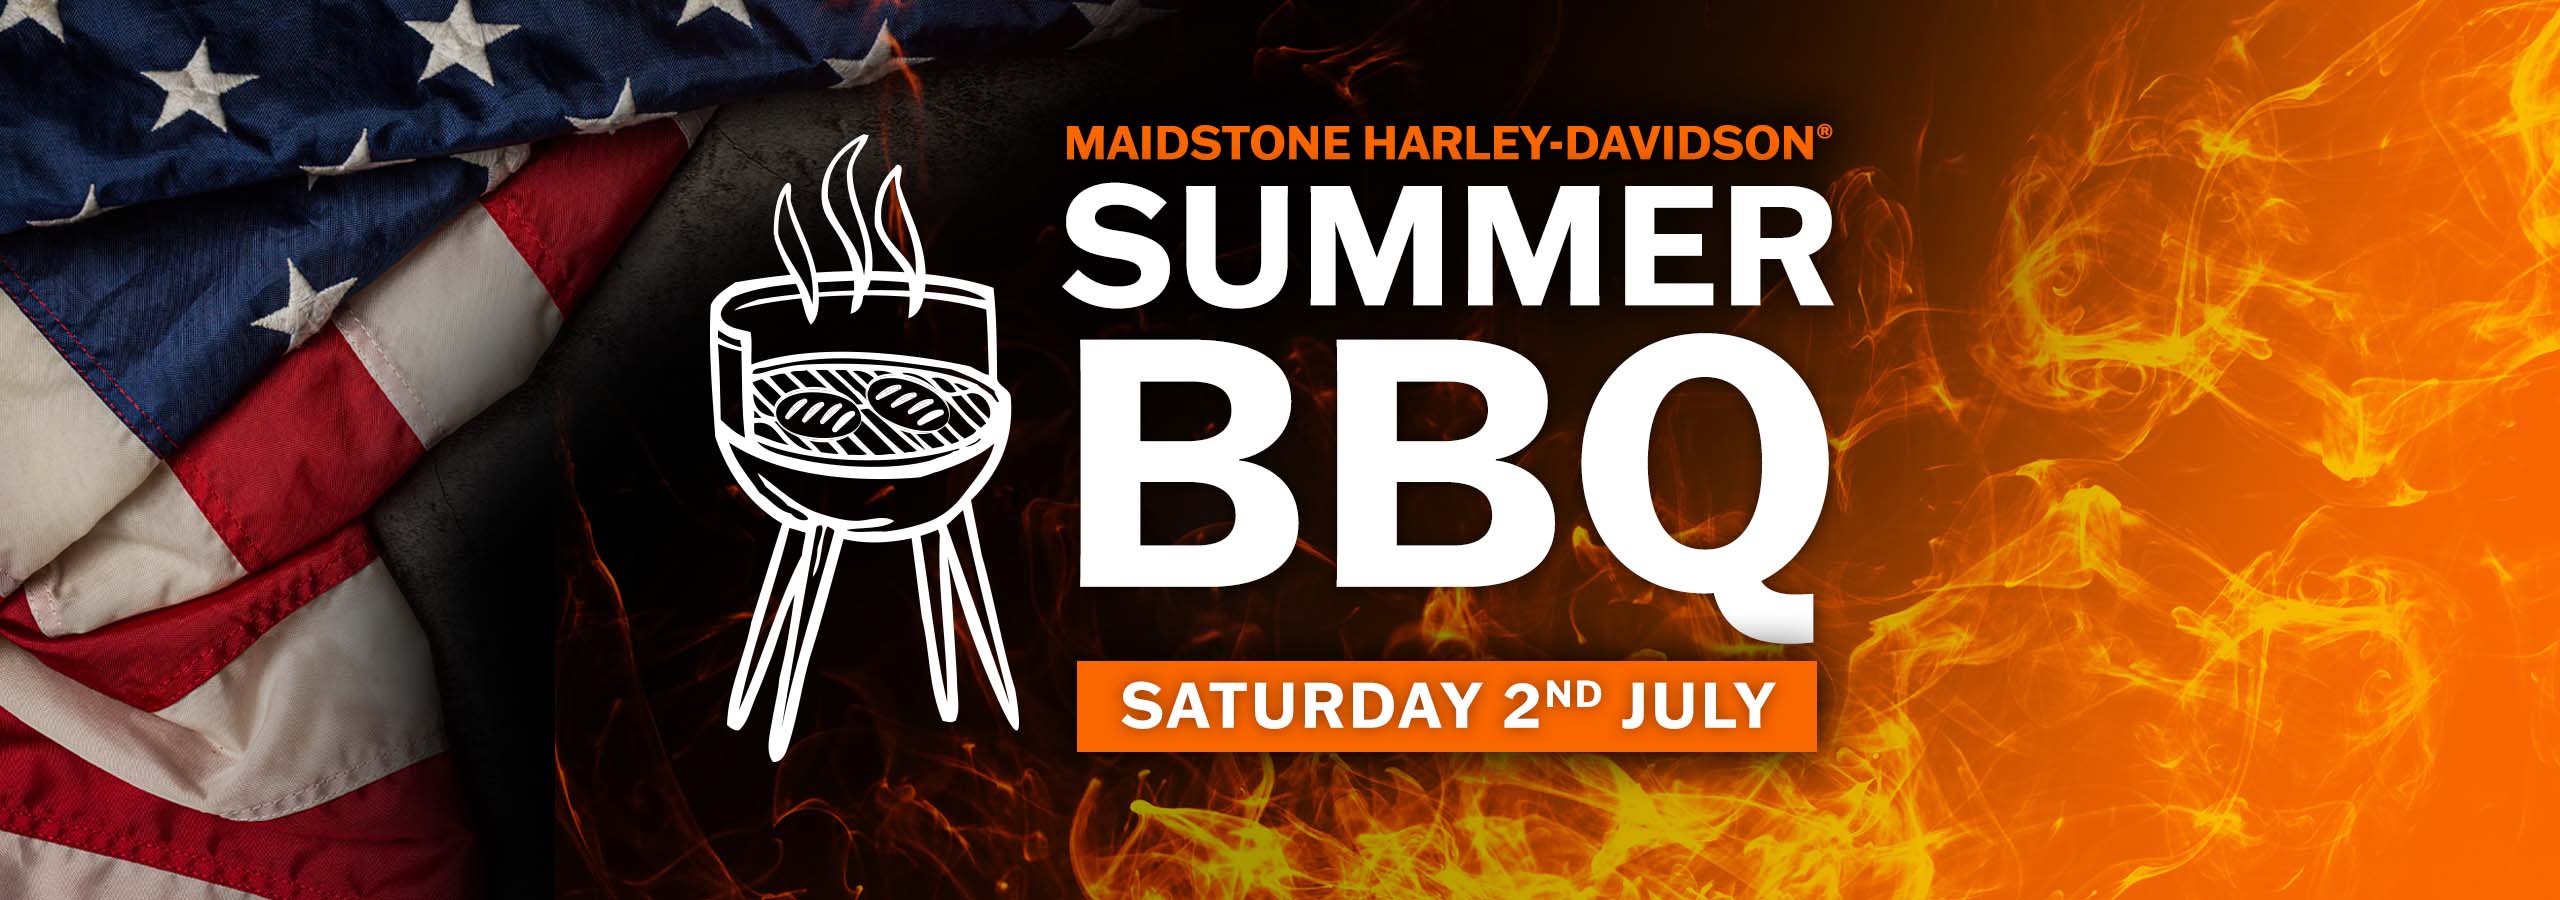 Maidstone Harley-Davidson Summer BBQ on Saturday 2nd July